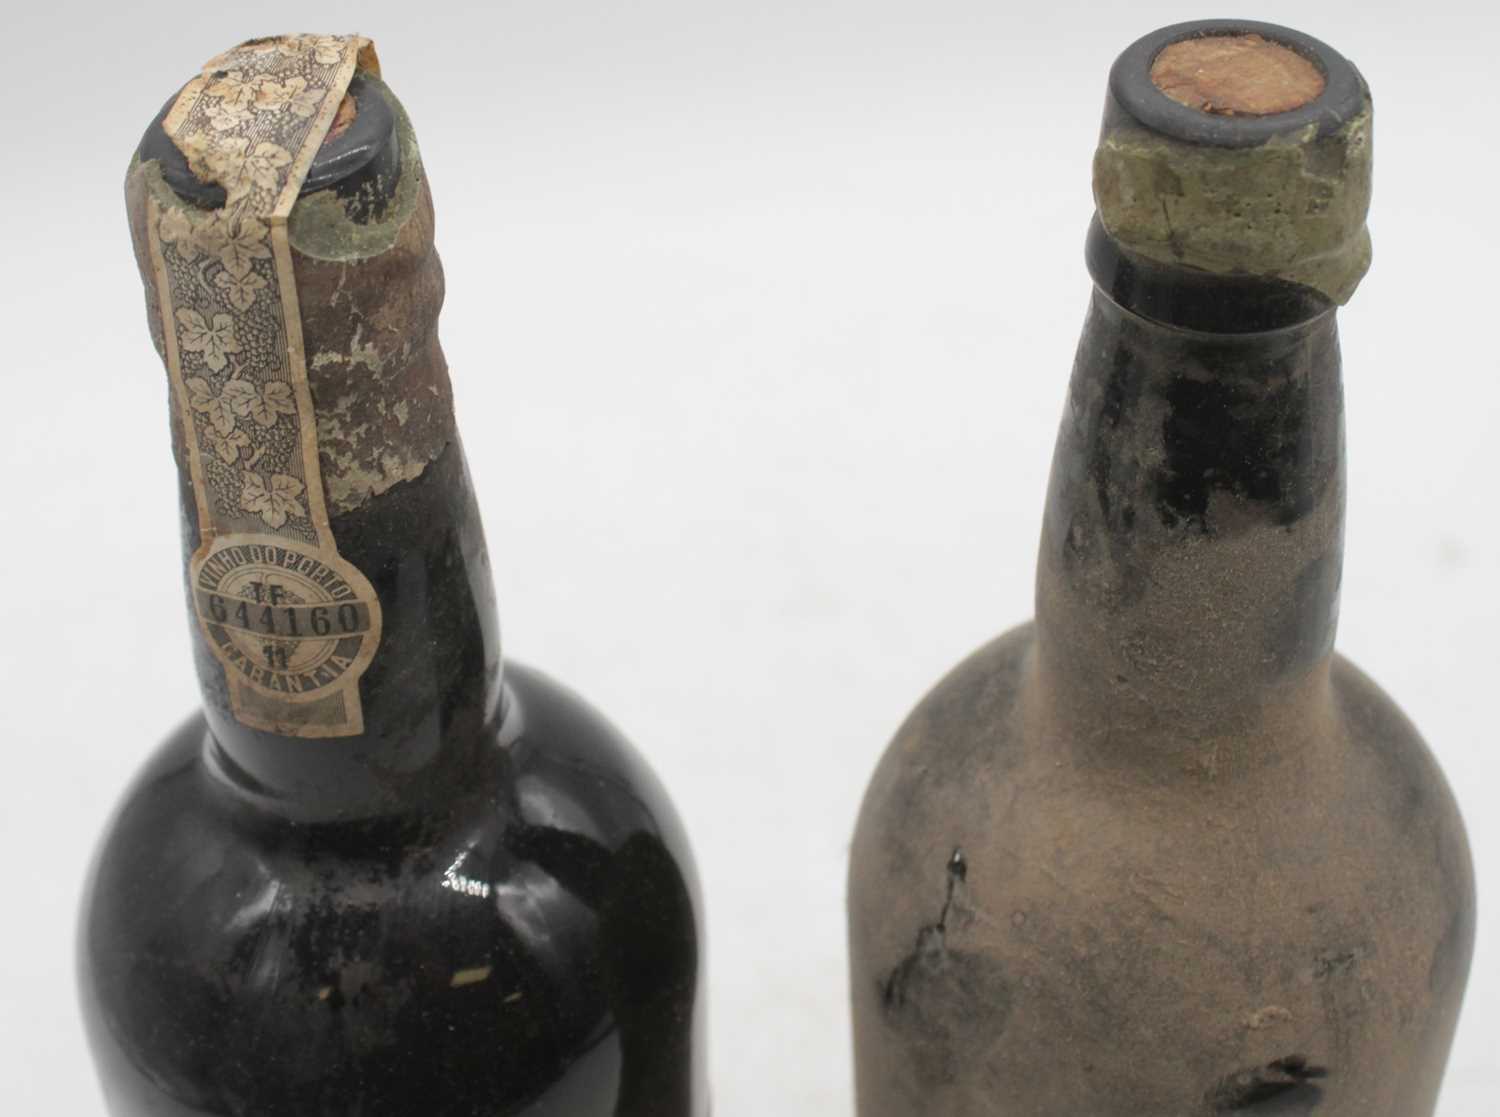 Taylor's Quinta de Vargellas vintage port, 1969, two bottles - Image 3 of 3